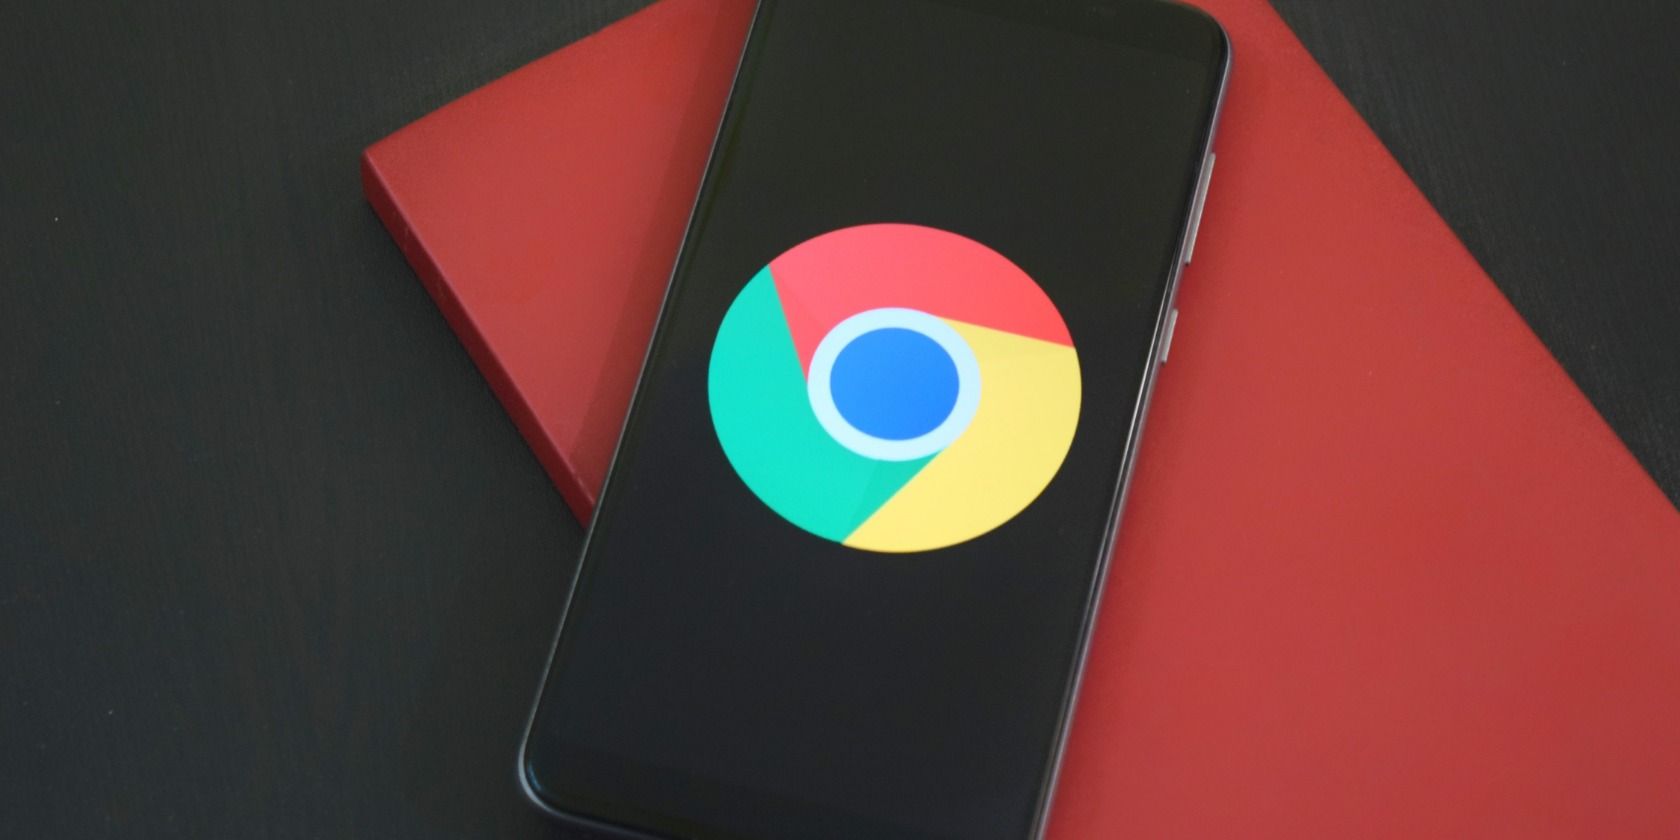 Chrome logo on a smartphone screen